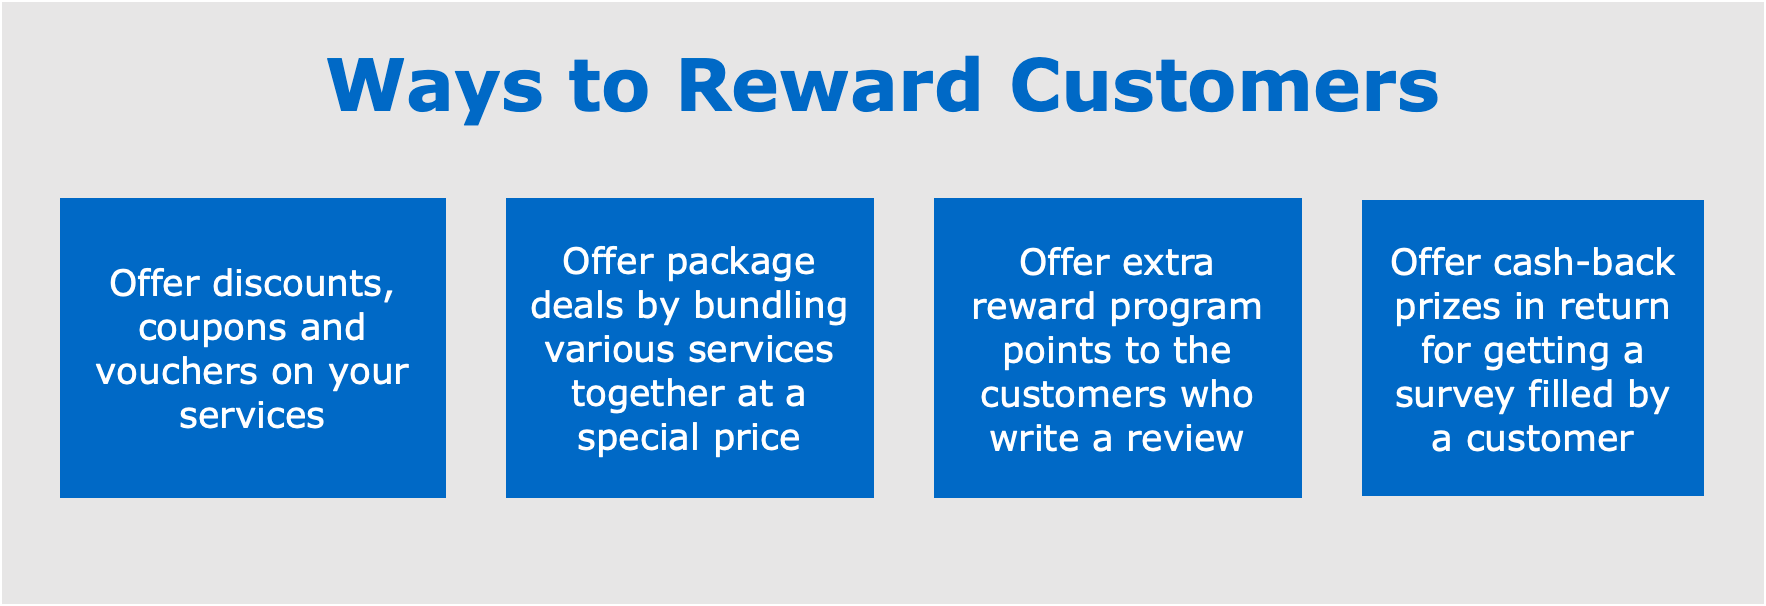 Ways to reward customers